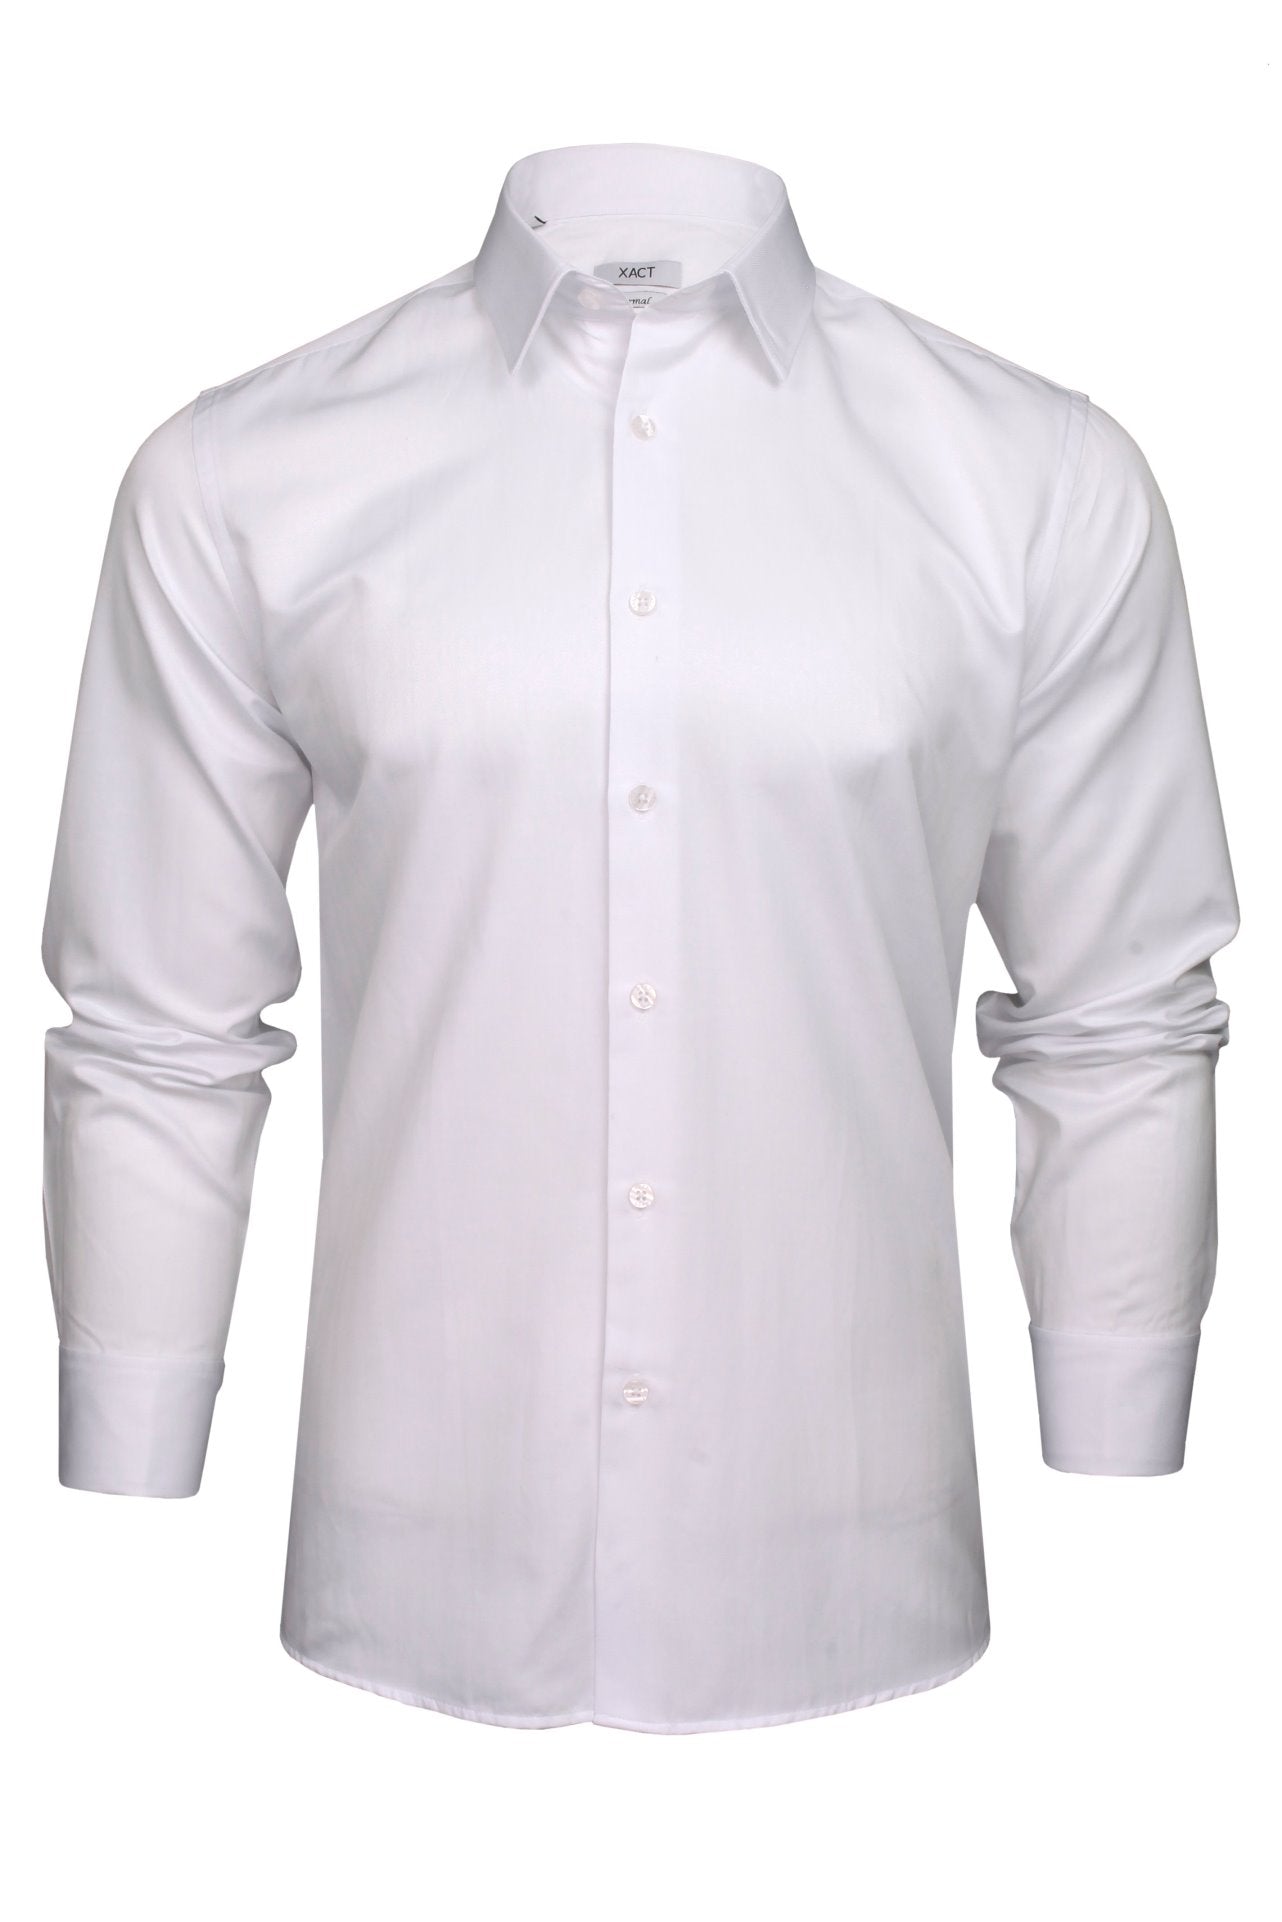 Xact Mens Herringbone Double Cuff Long Sleeved Formal/ Dress Shirt - Cufflinks Included-2